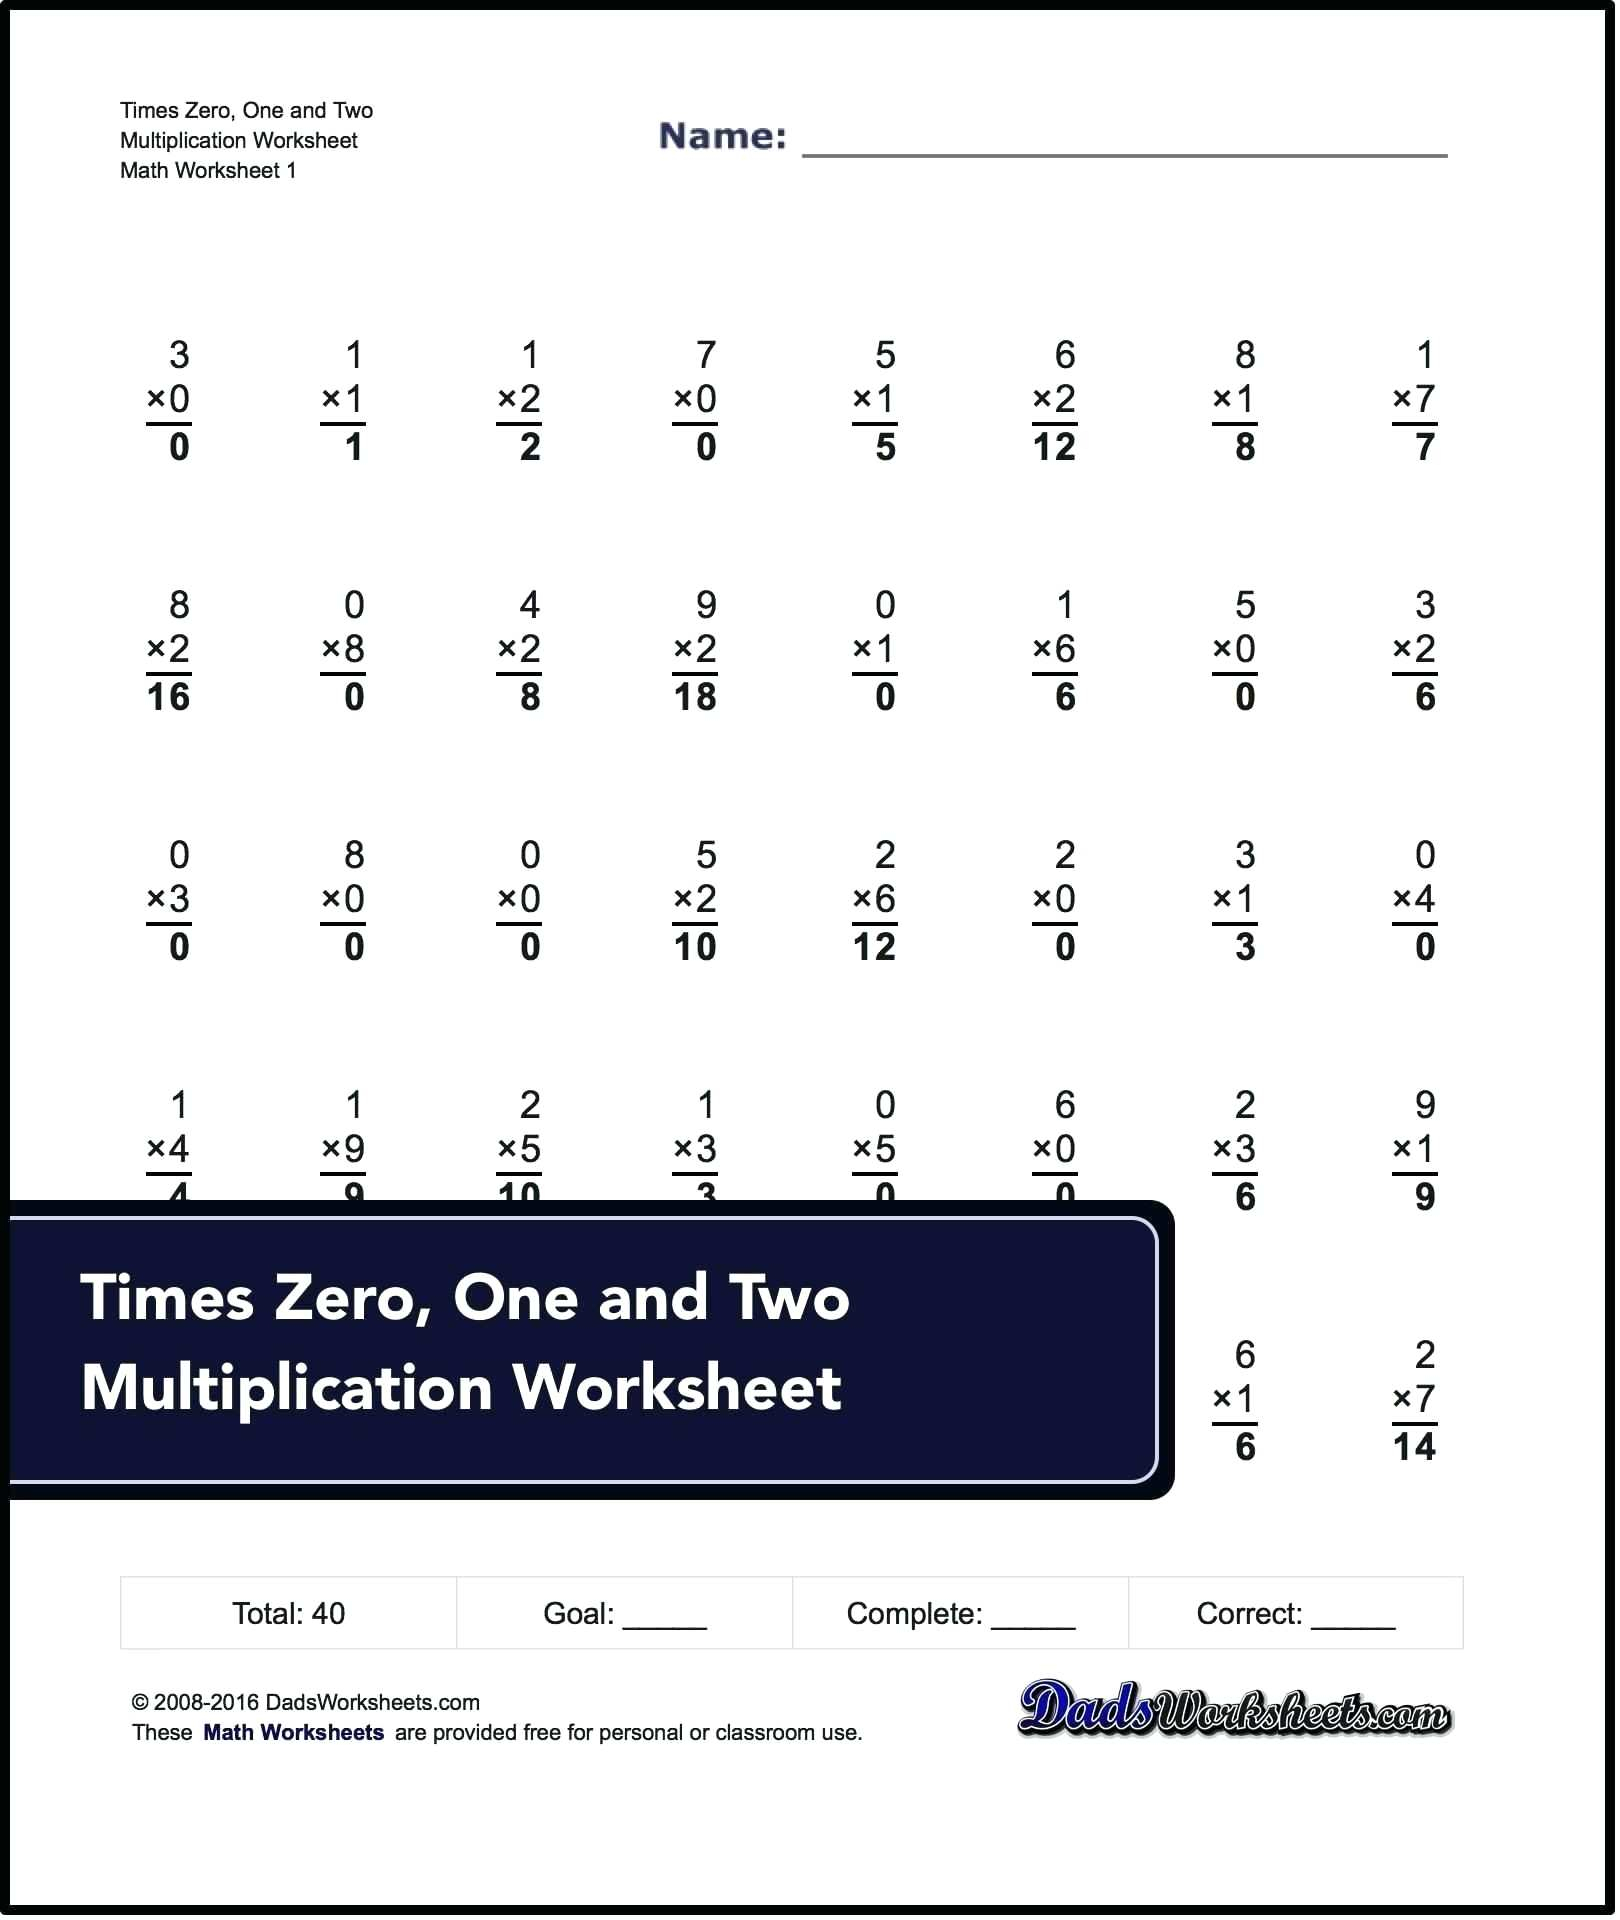 Fun French Lessons Ks2 English Music Science Maths Homework pertaining to Multiplication Worksheets Ks2 Printable